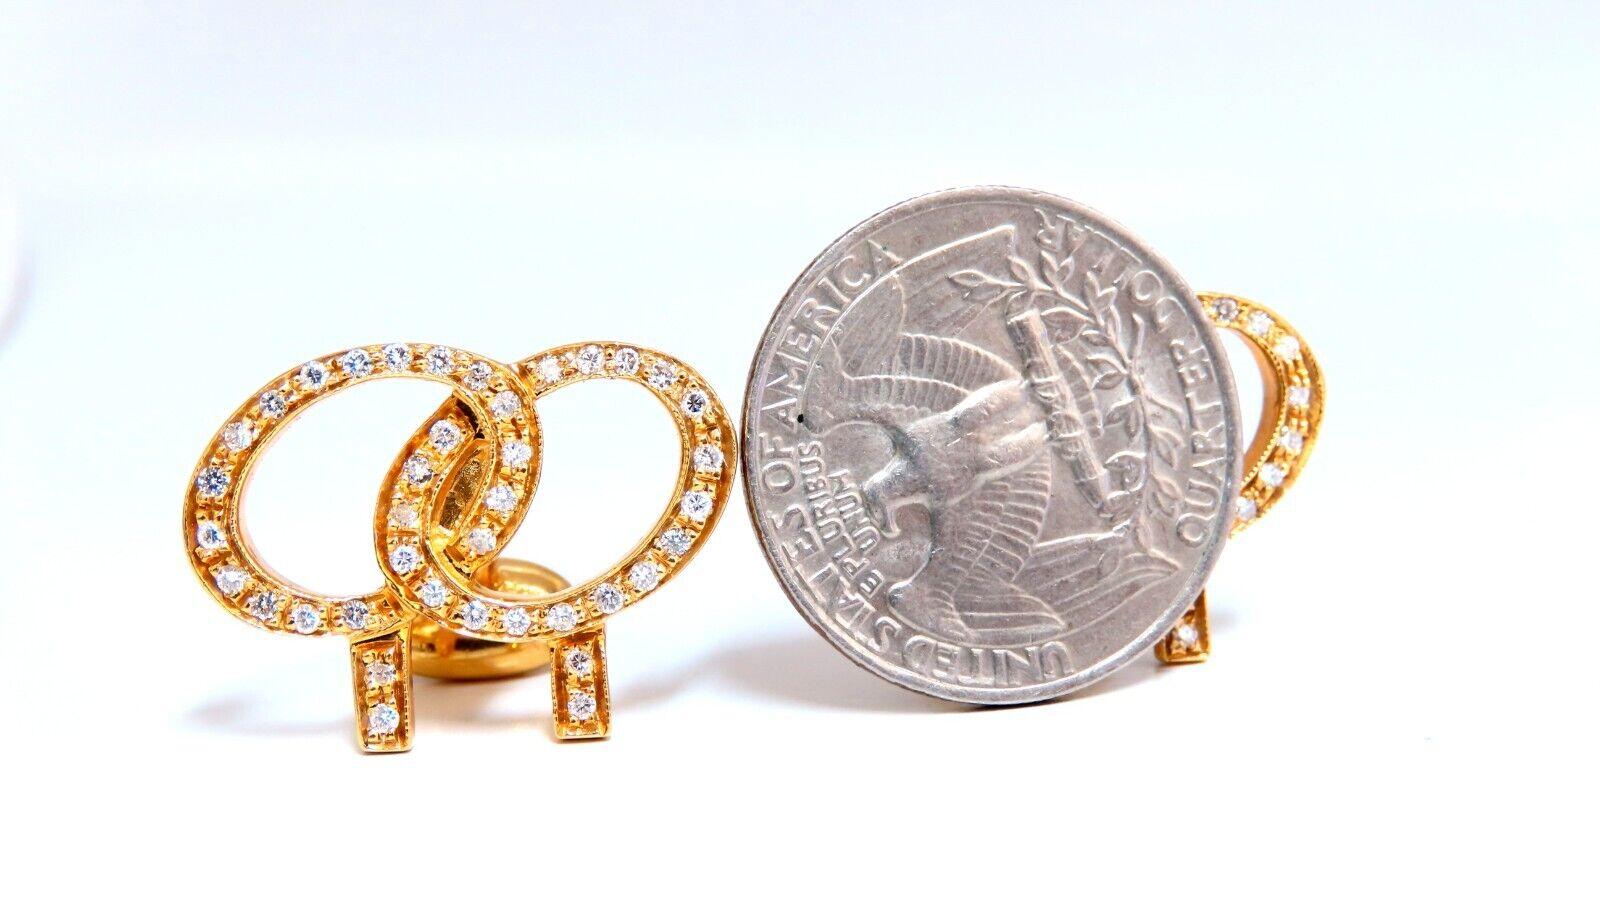 Doubletree employee cufflinks

25 x 18mm diameter top

1.10 carat natural round diamonds.

H-color vs2 clarity

14kt yellow gold

14 grams